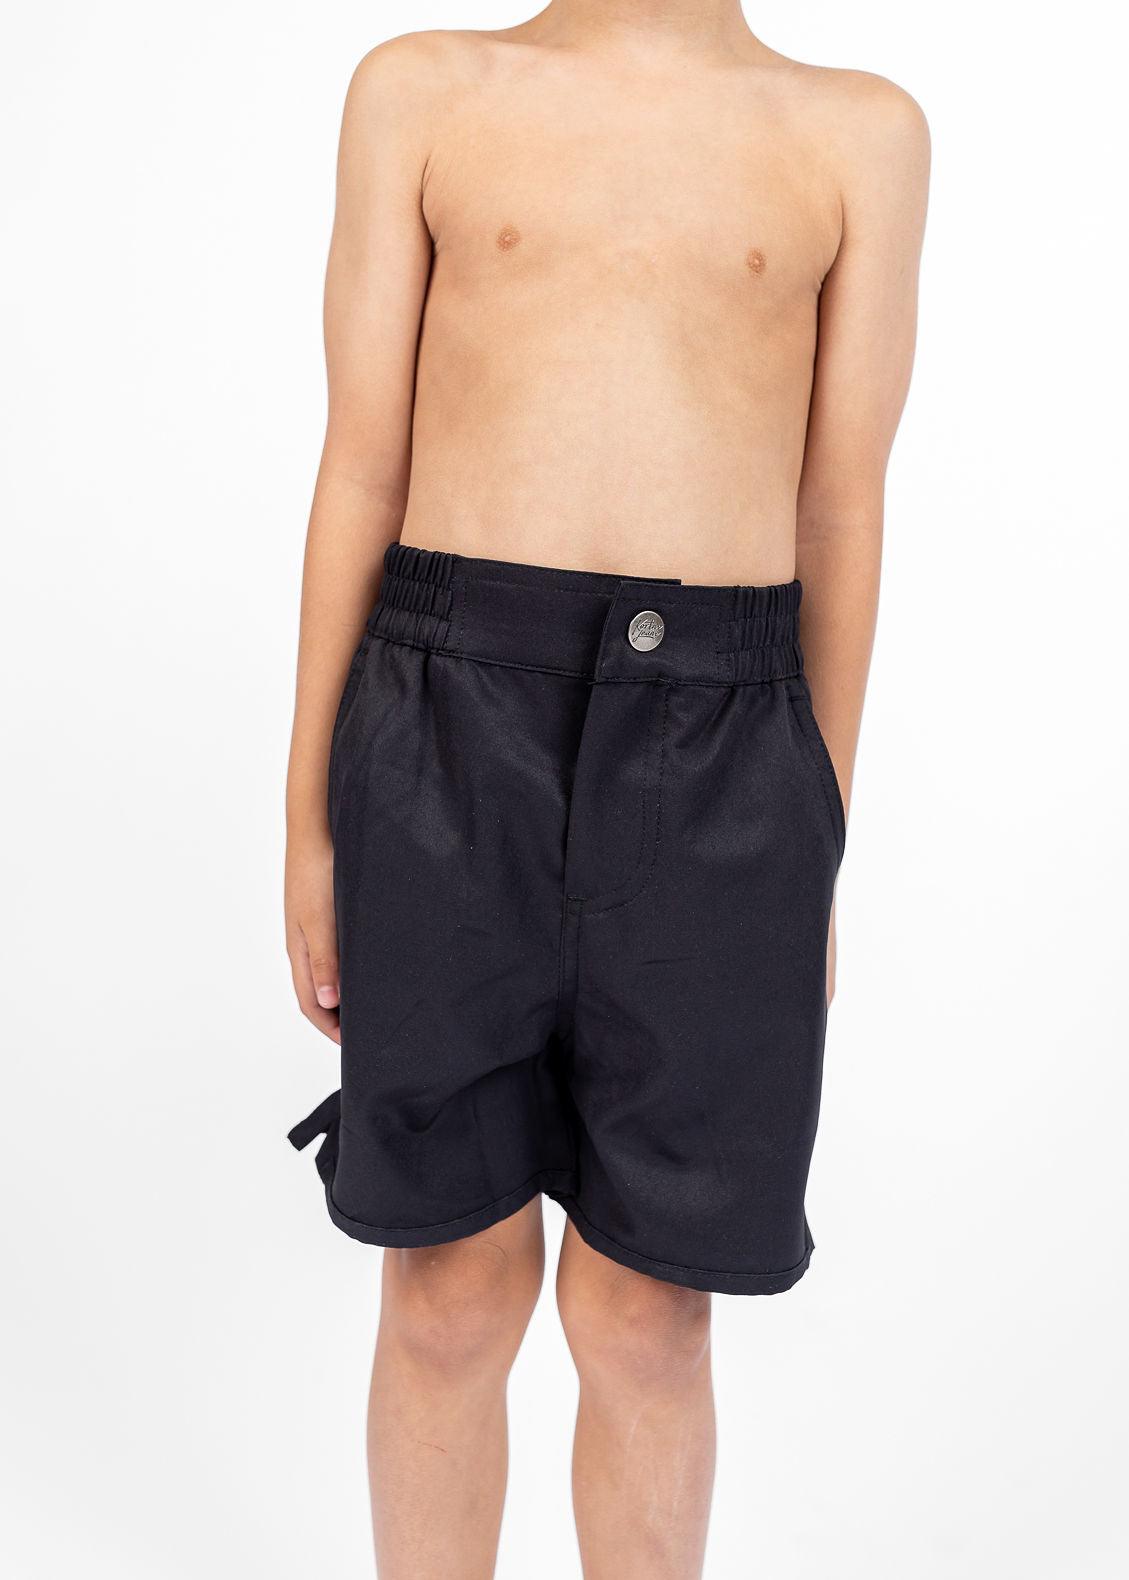 Boys Swimsuit - Shorts  - Black